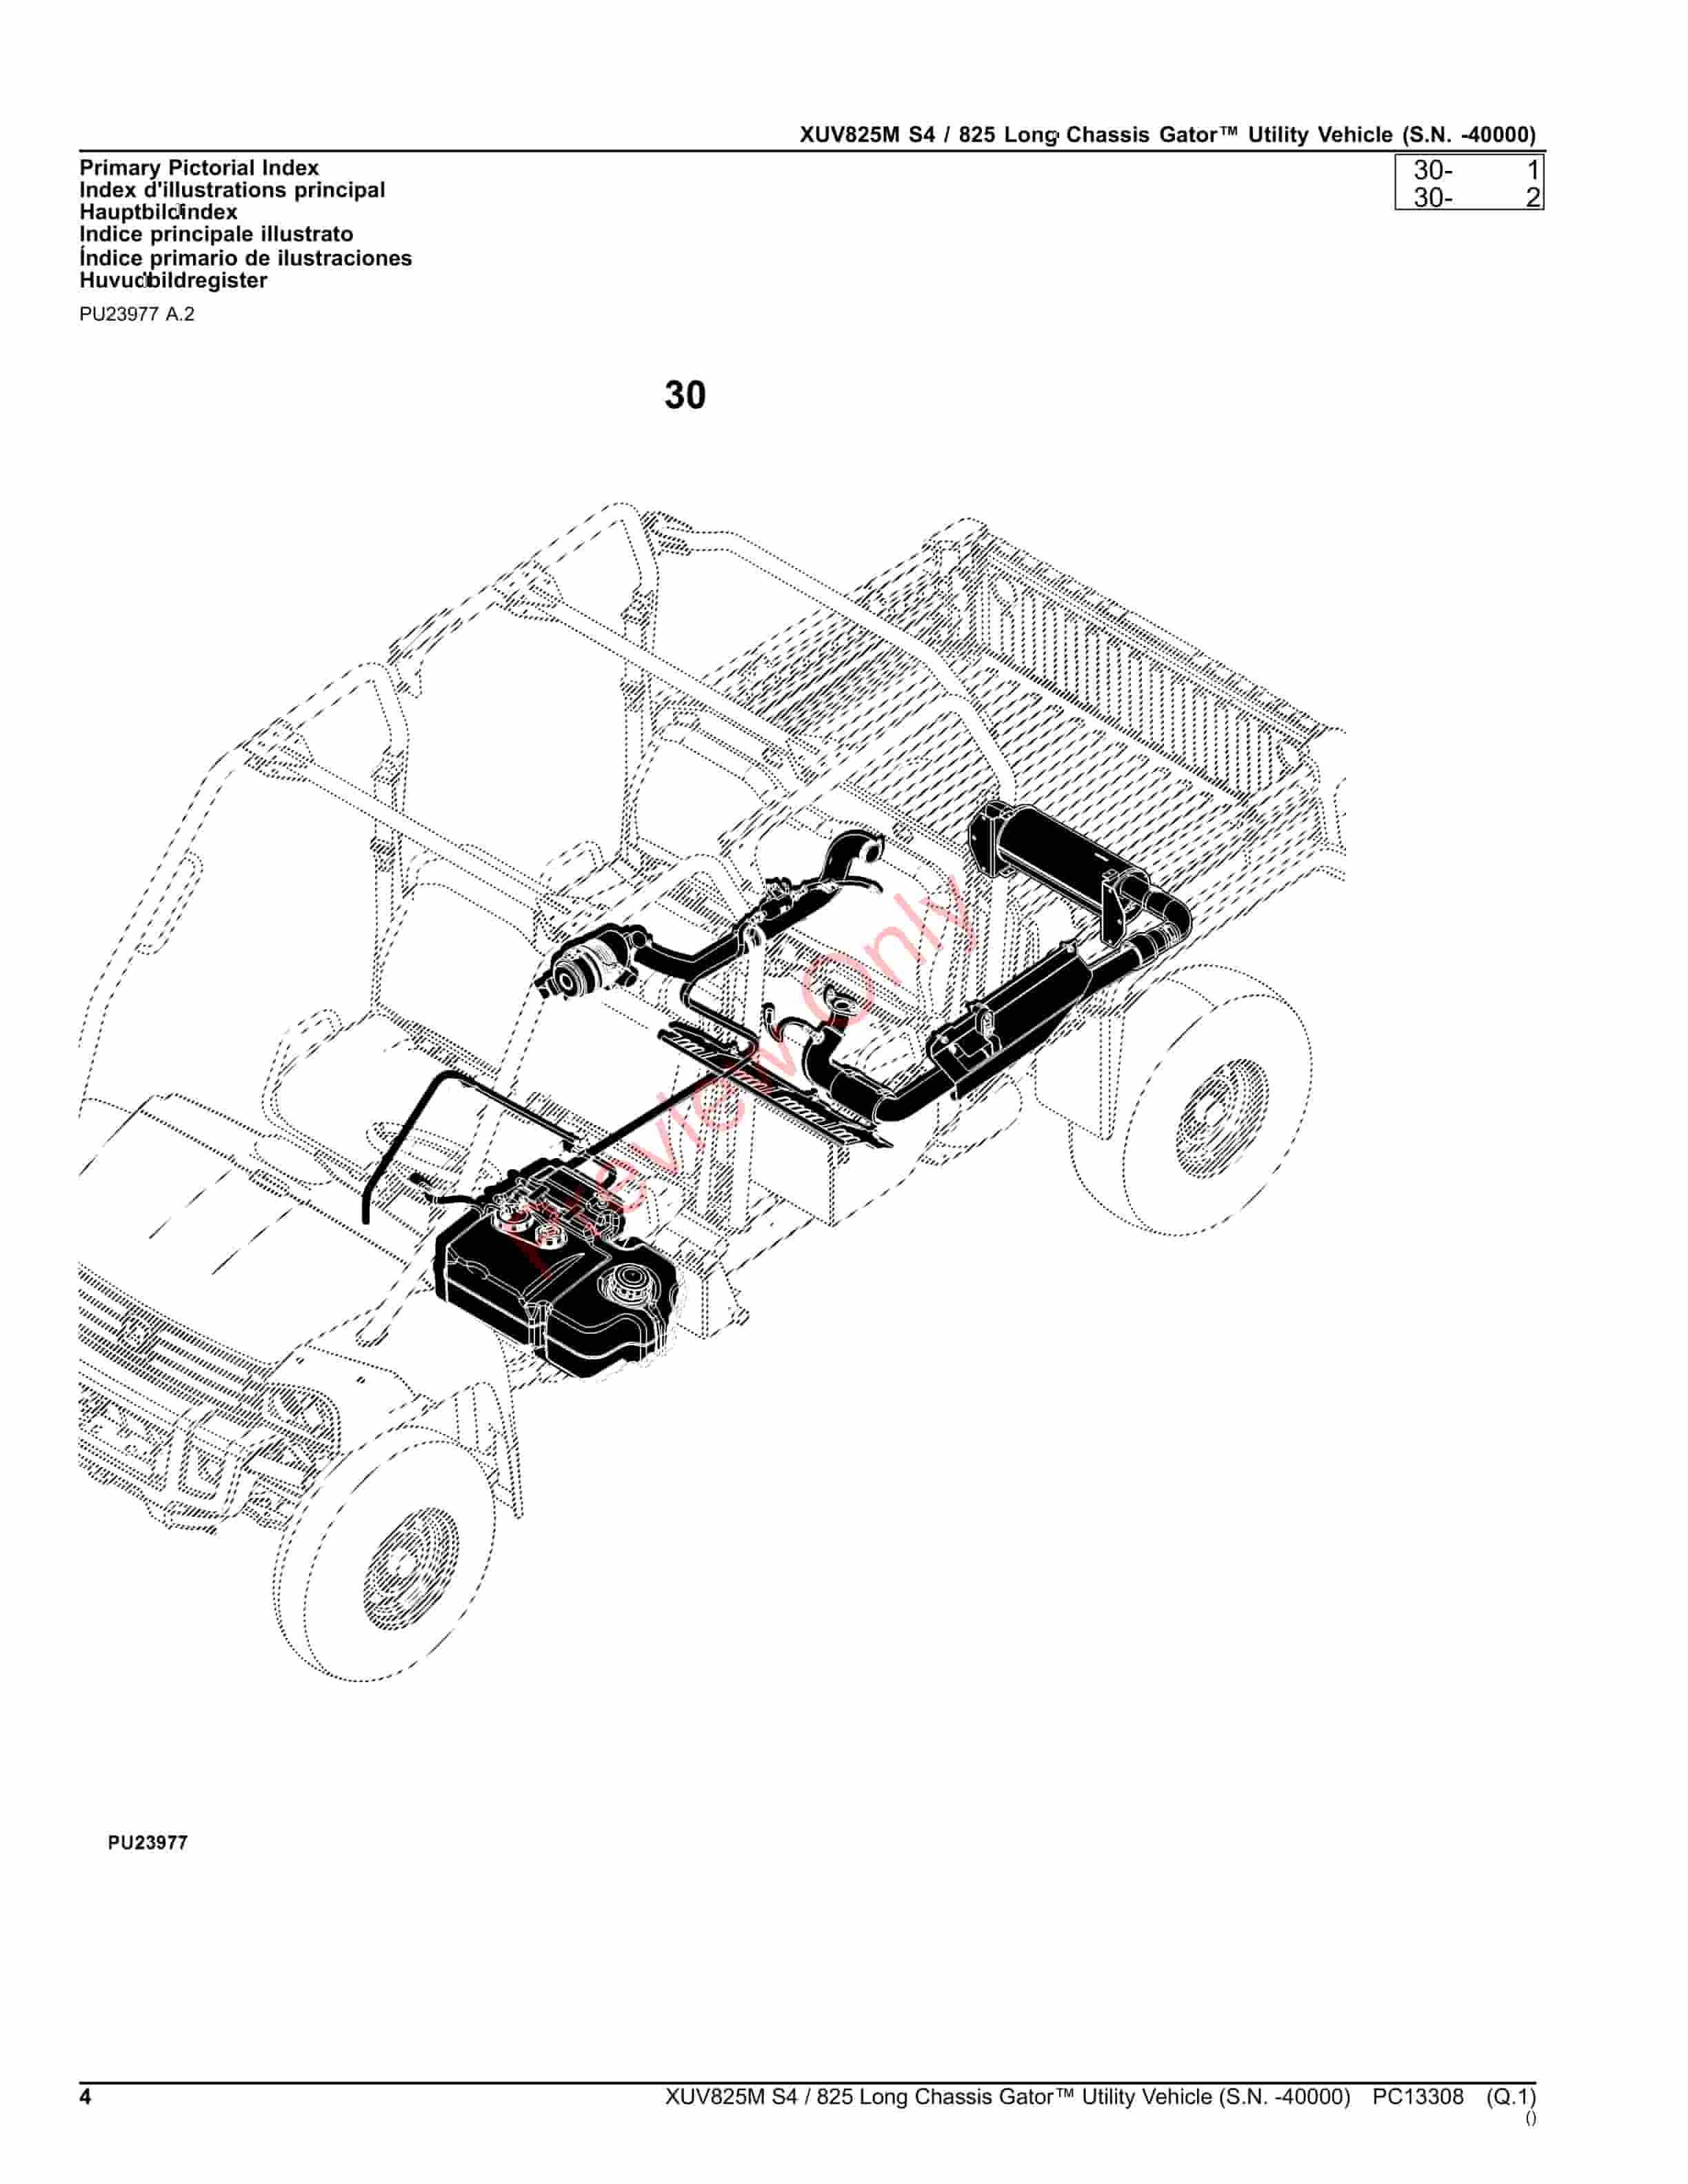 John Deere XUV825M S4 825 Long Chassis Gator Utility Vehicle (000000 Parts Catalog PC13308 10SEP23-4